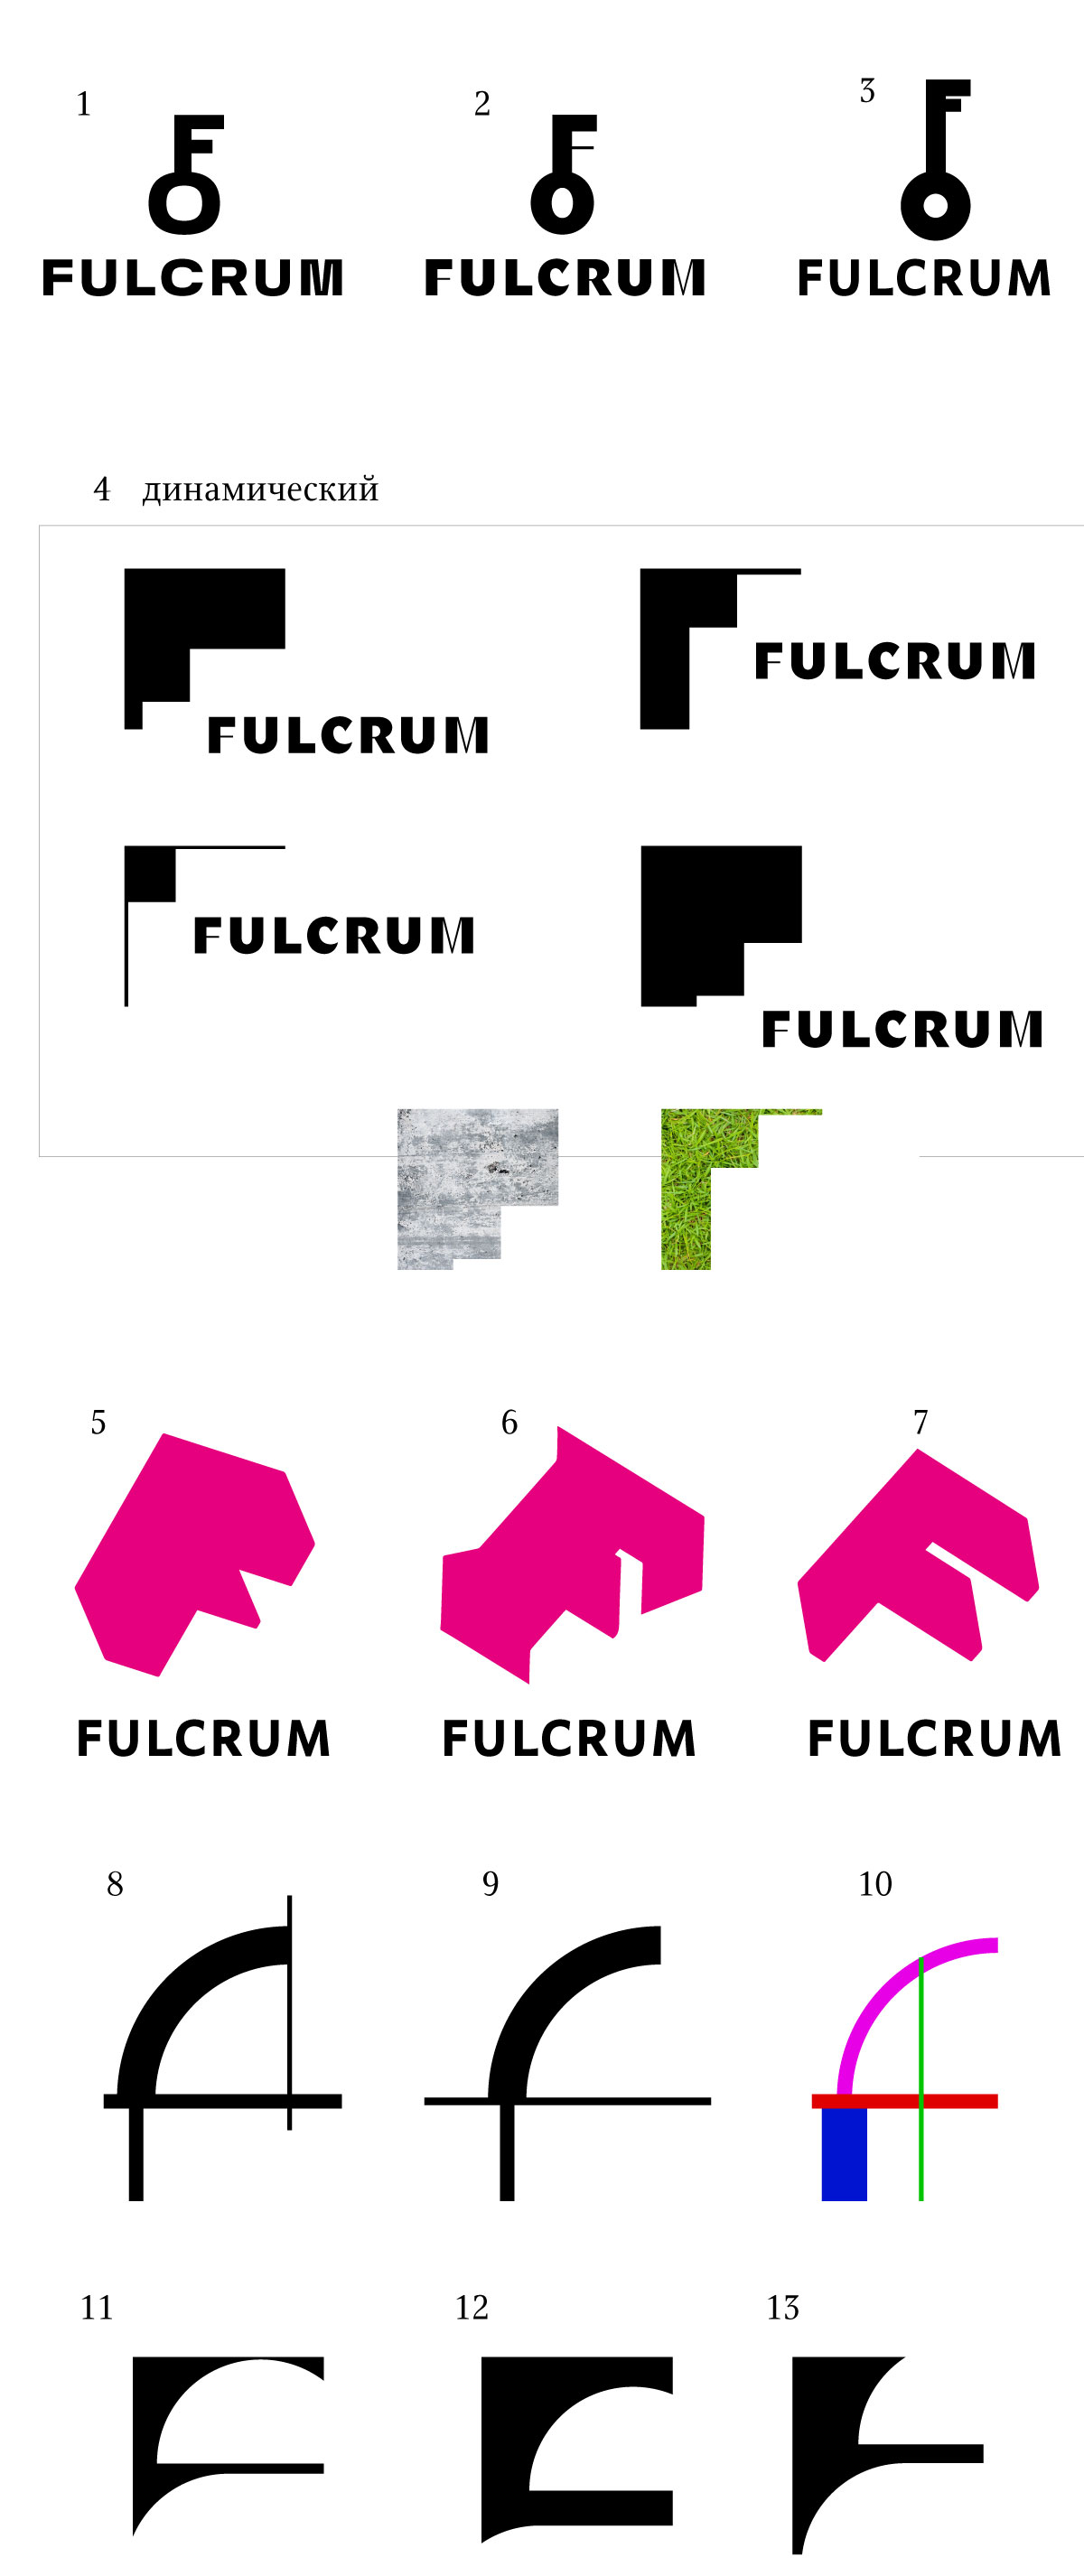 fulcrum process 01